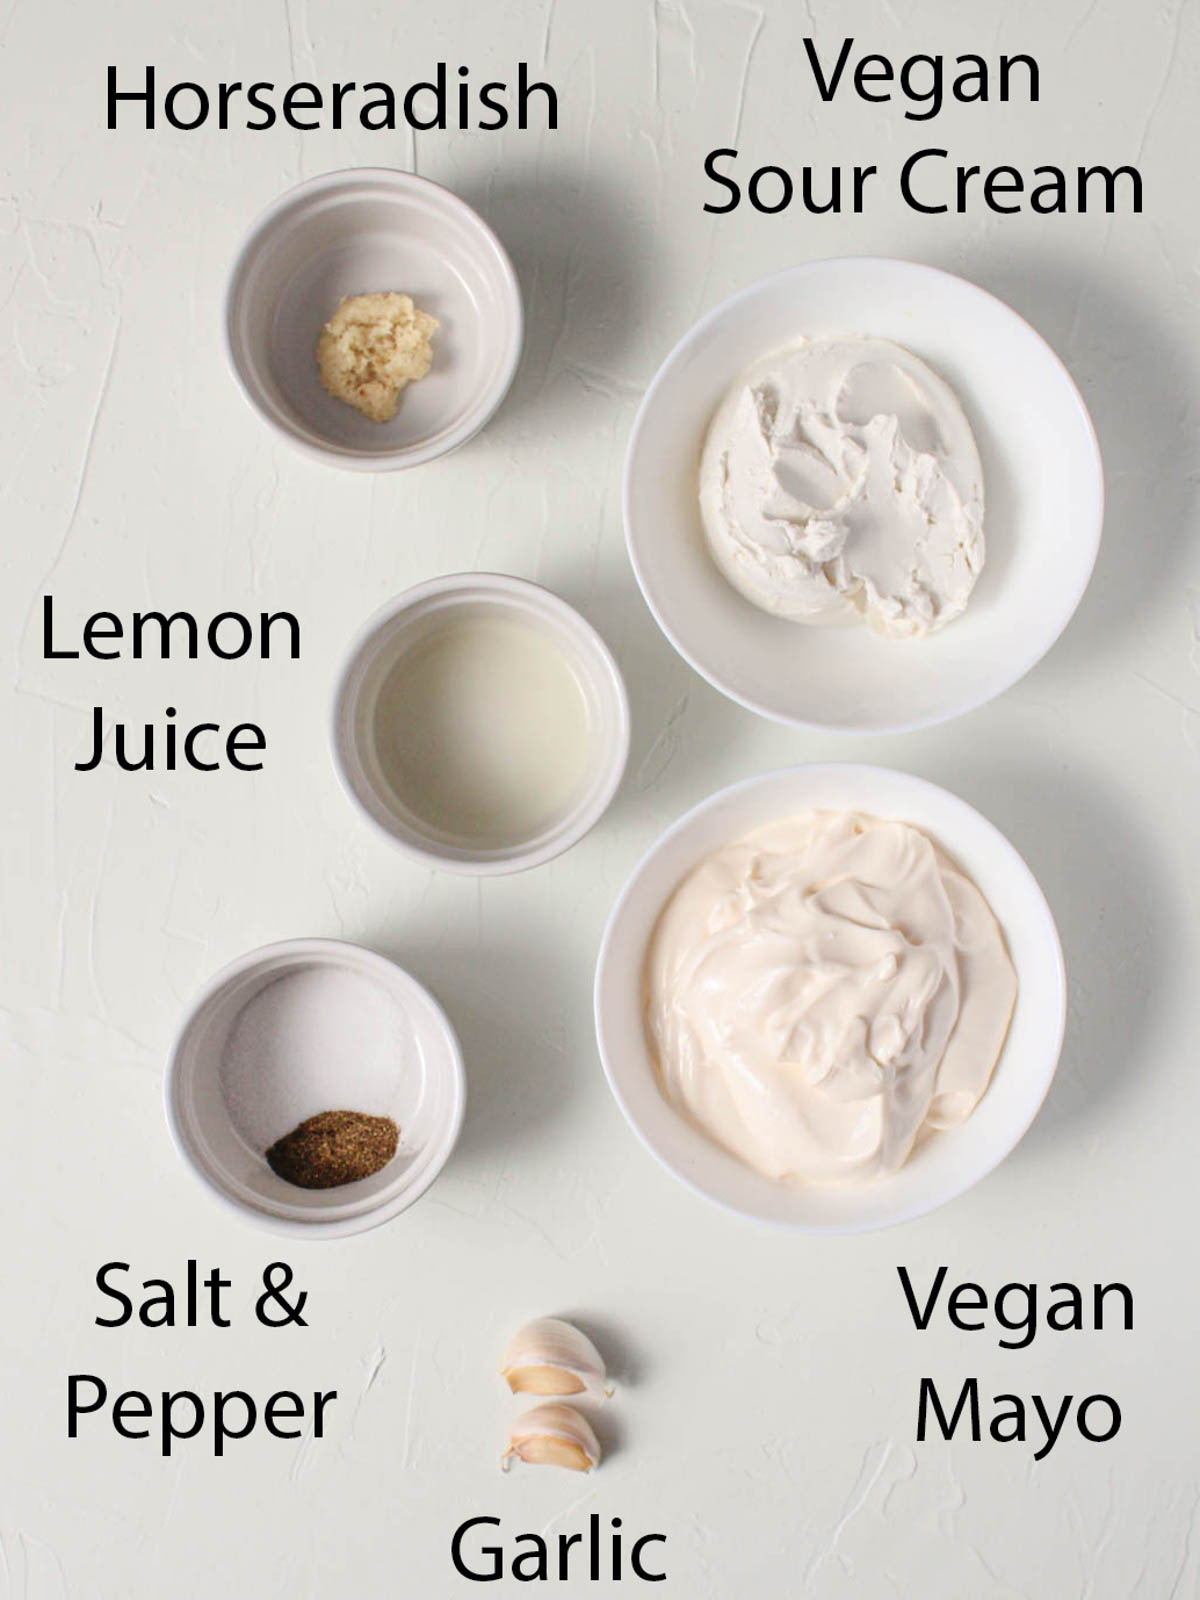 Ingredients: horseradish, vegan sour cream, vegan mayo, lemon juice, garlic, salt & pepper.